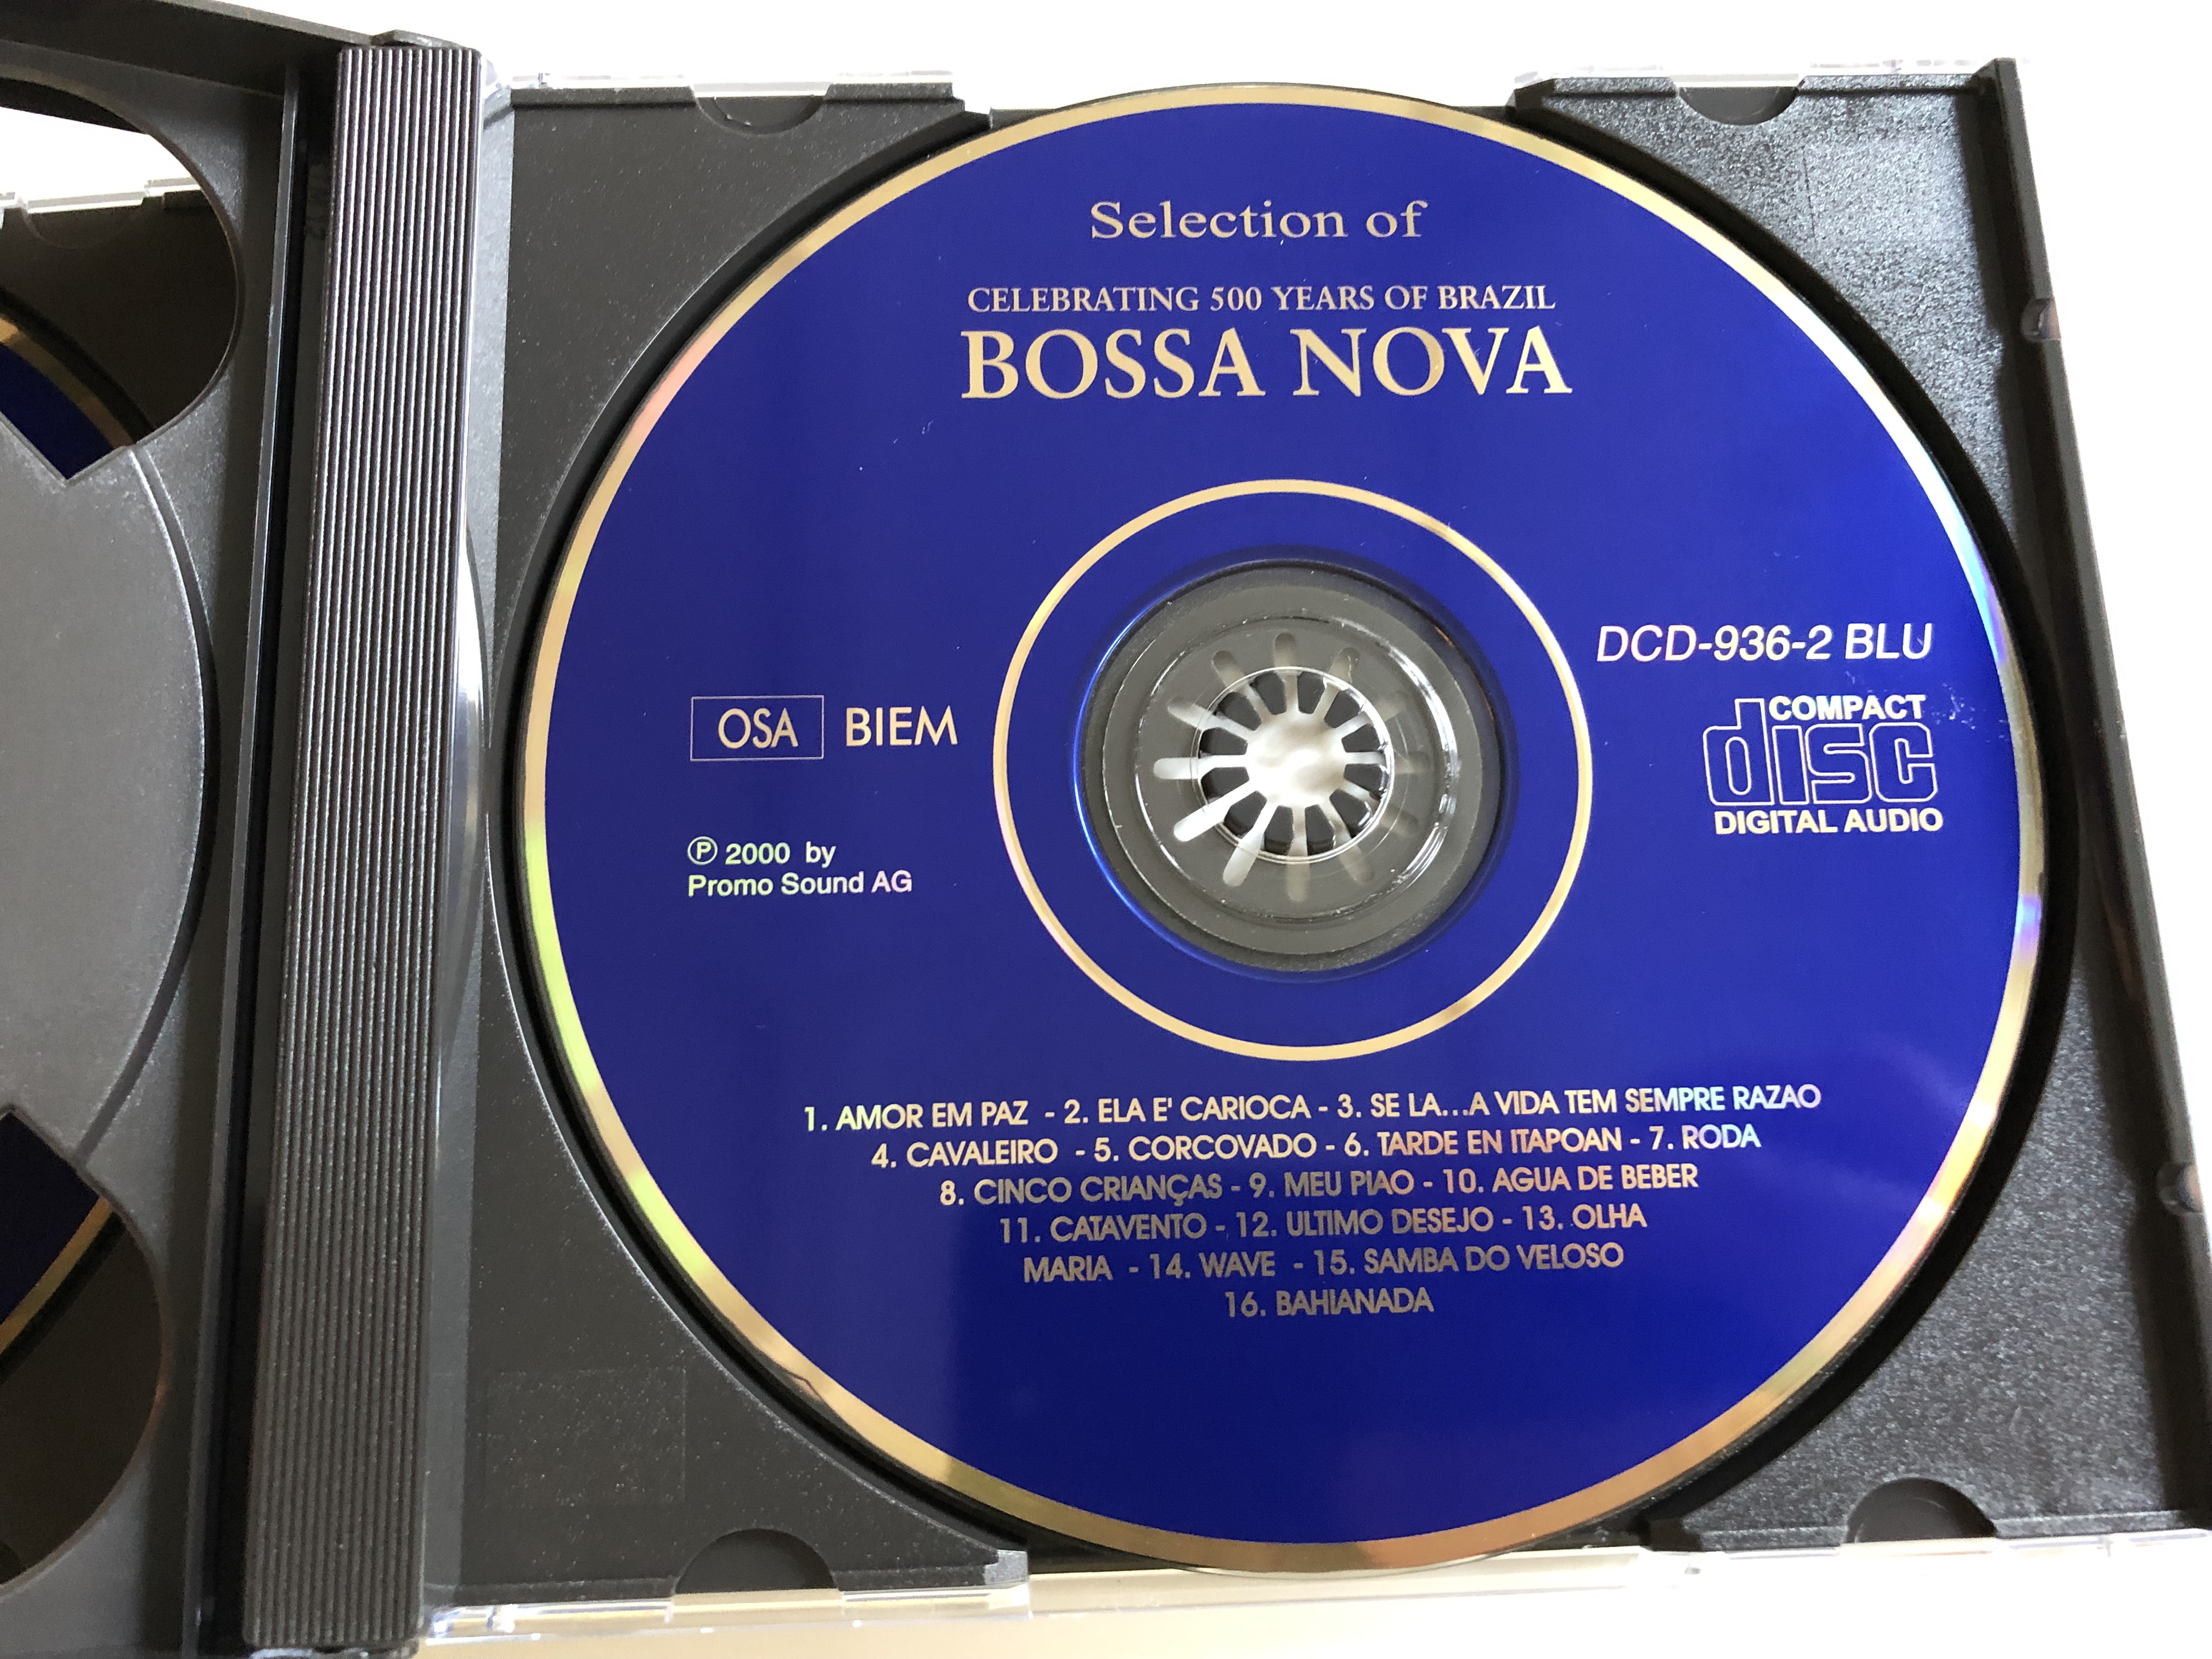 bossa-nova-selection-celebrating-500-years-of-brazil-antonio-carlos-jobim-caetano-veloso-joao-astrud-gilberto-joyce-gilberto-gil-gal-costa-flavio-faria-jos-barrense-dias-audio-cd-2000-dcd-936-blu-2-cd-3538997-.jpg